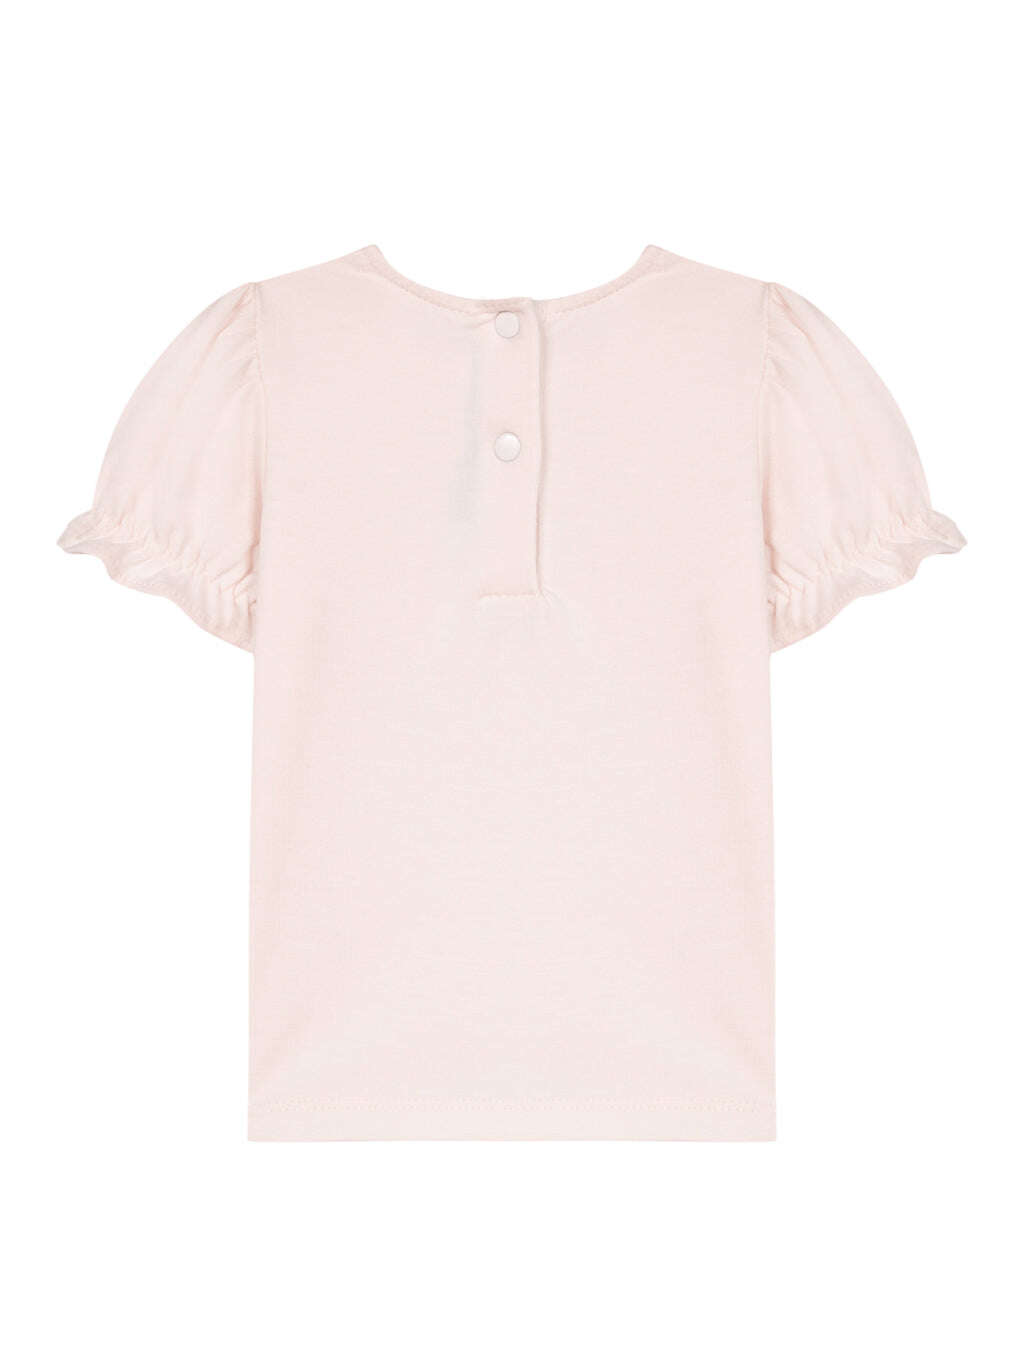 Tee-shirt - Jersey rose pâle